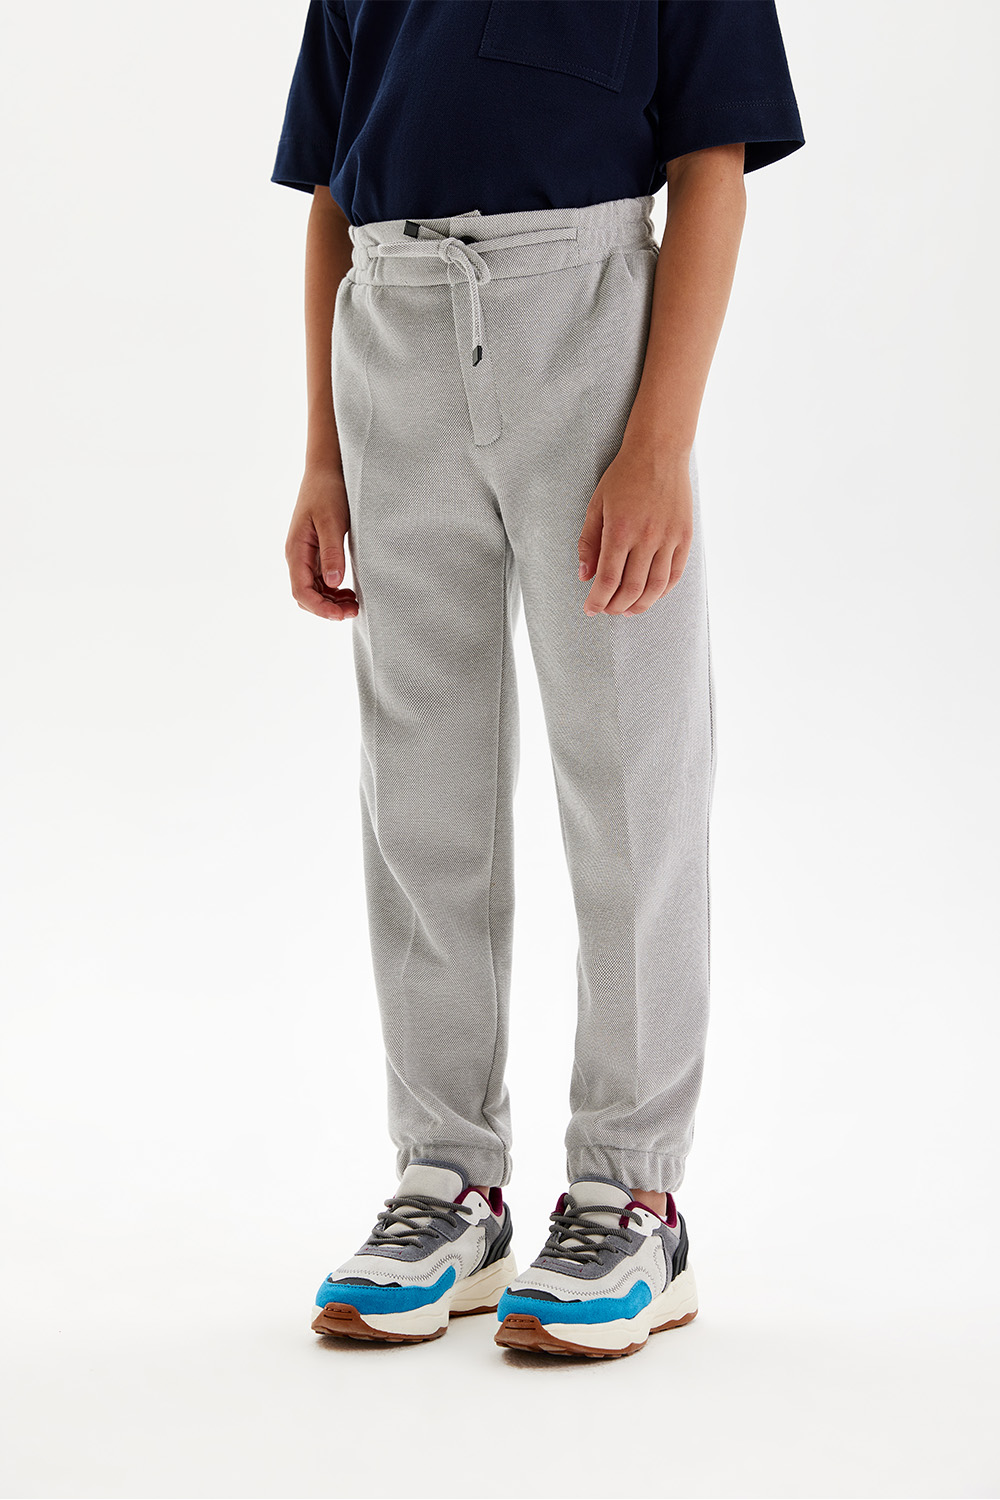 Трикотажные брюки (SNFSB-228-16808-722) Silver Spoon